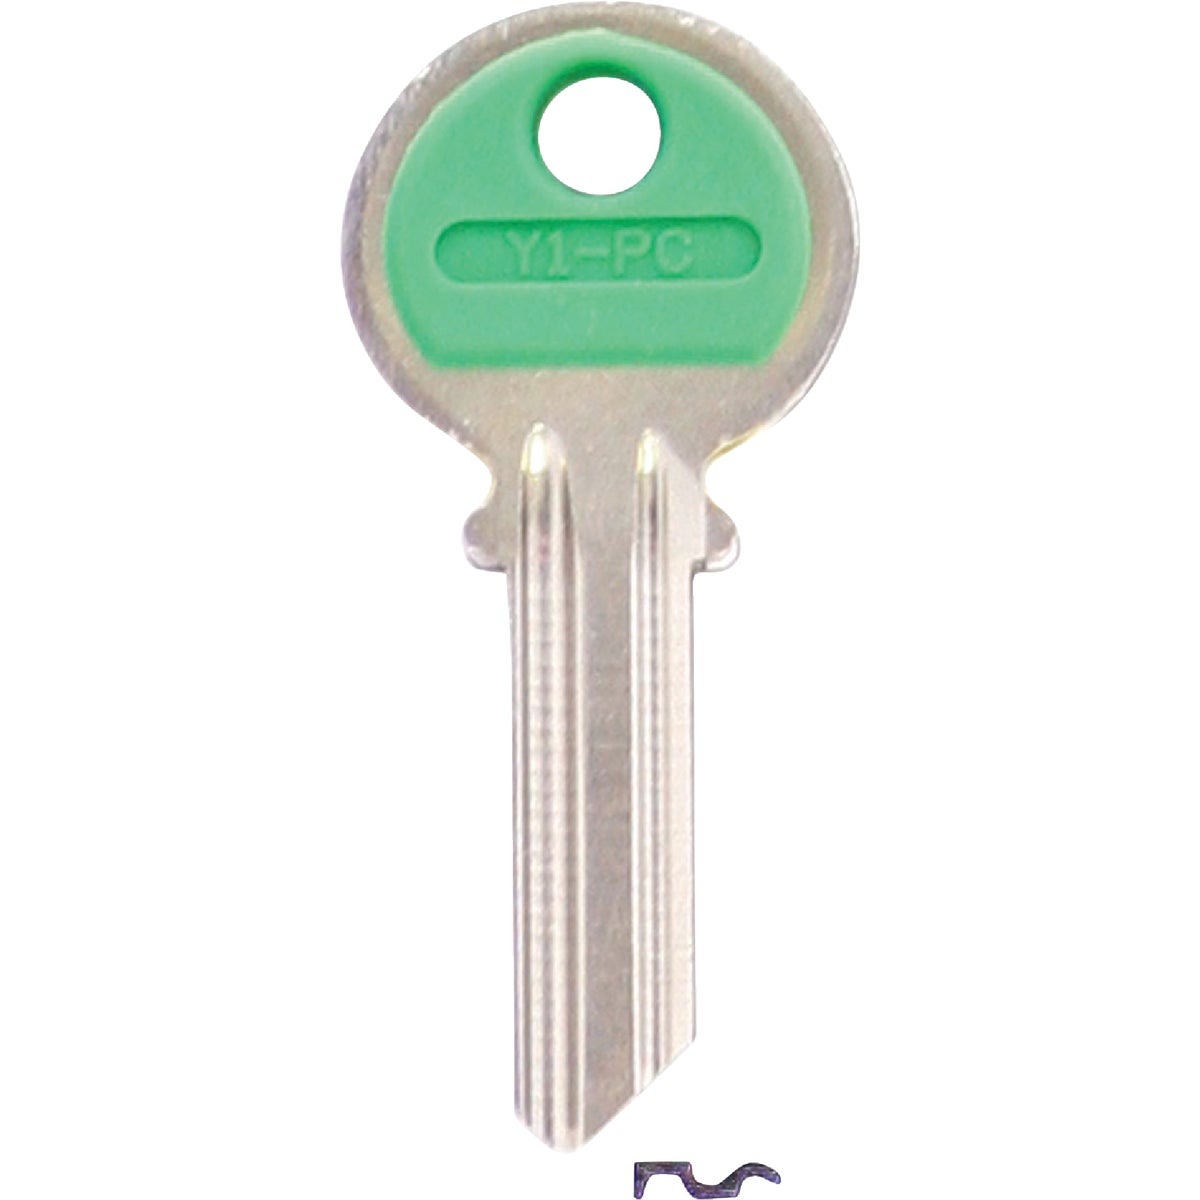 Item 235757, Nickel-plated key blank with plastic insert.